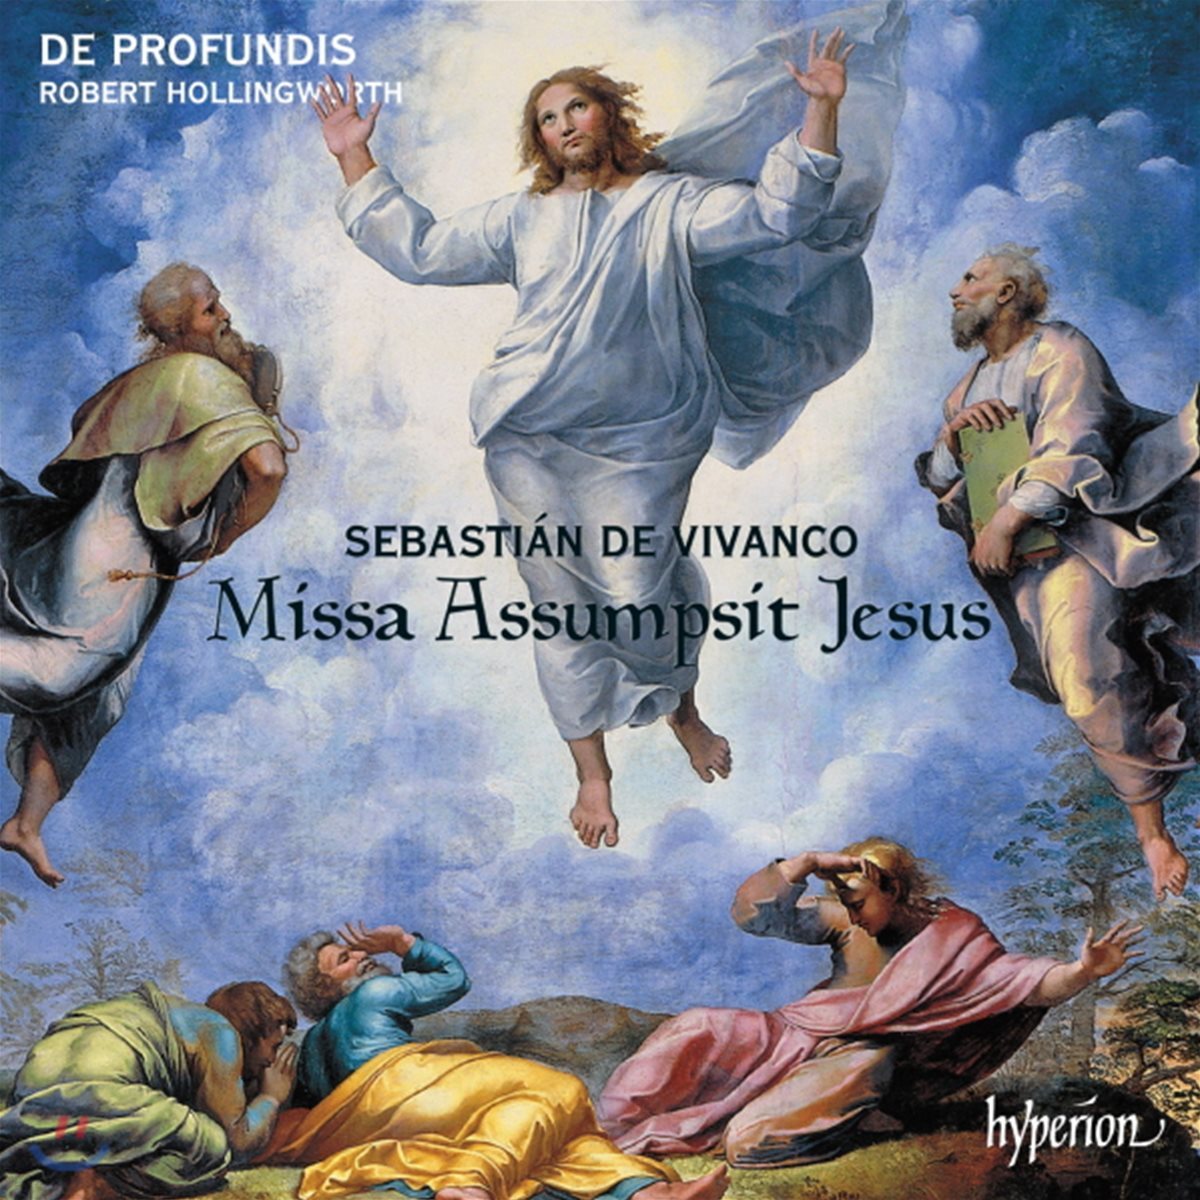 De Profundis / Robert Hollingworth 세바스티안 데 비방코: 미사 예수 승천 - 미사곡 & 모테트 작품집 (Sebastian de Vivanco: Missa Assumpsit Jesus)